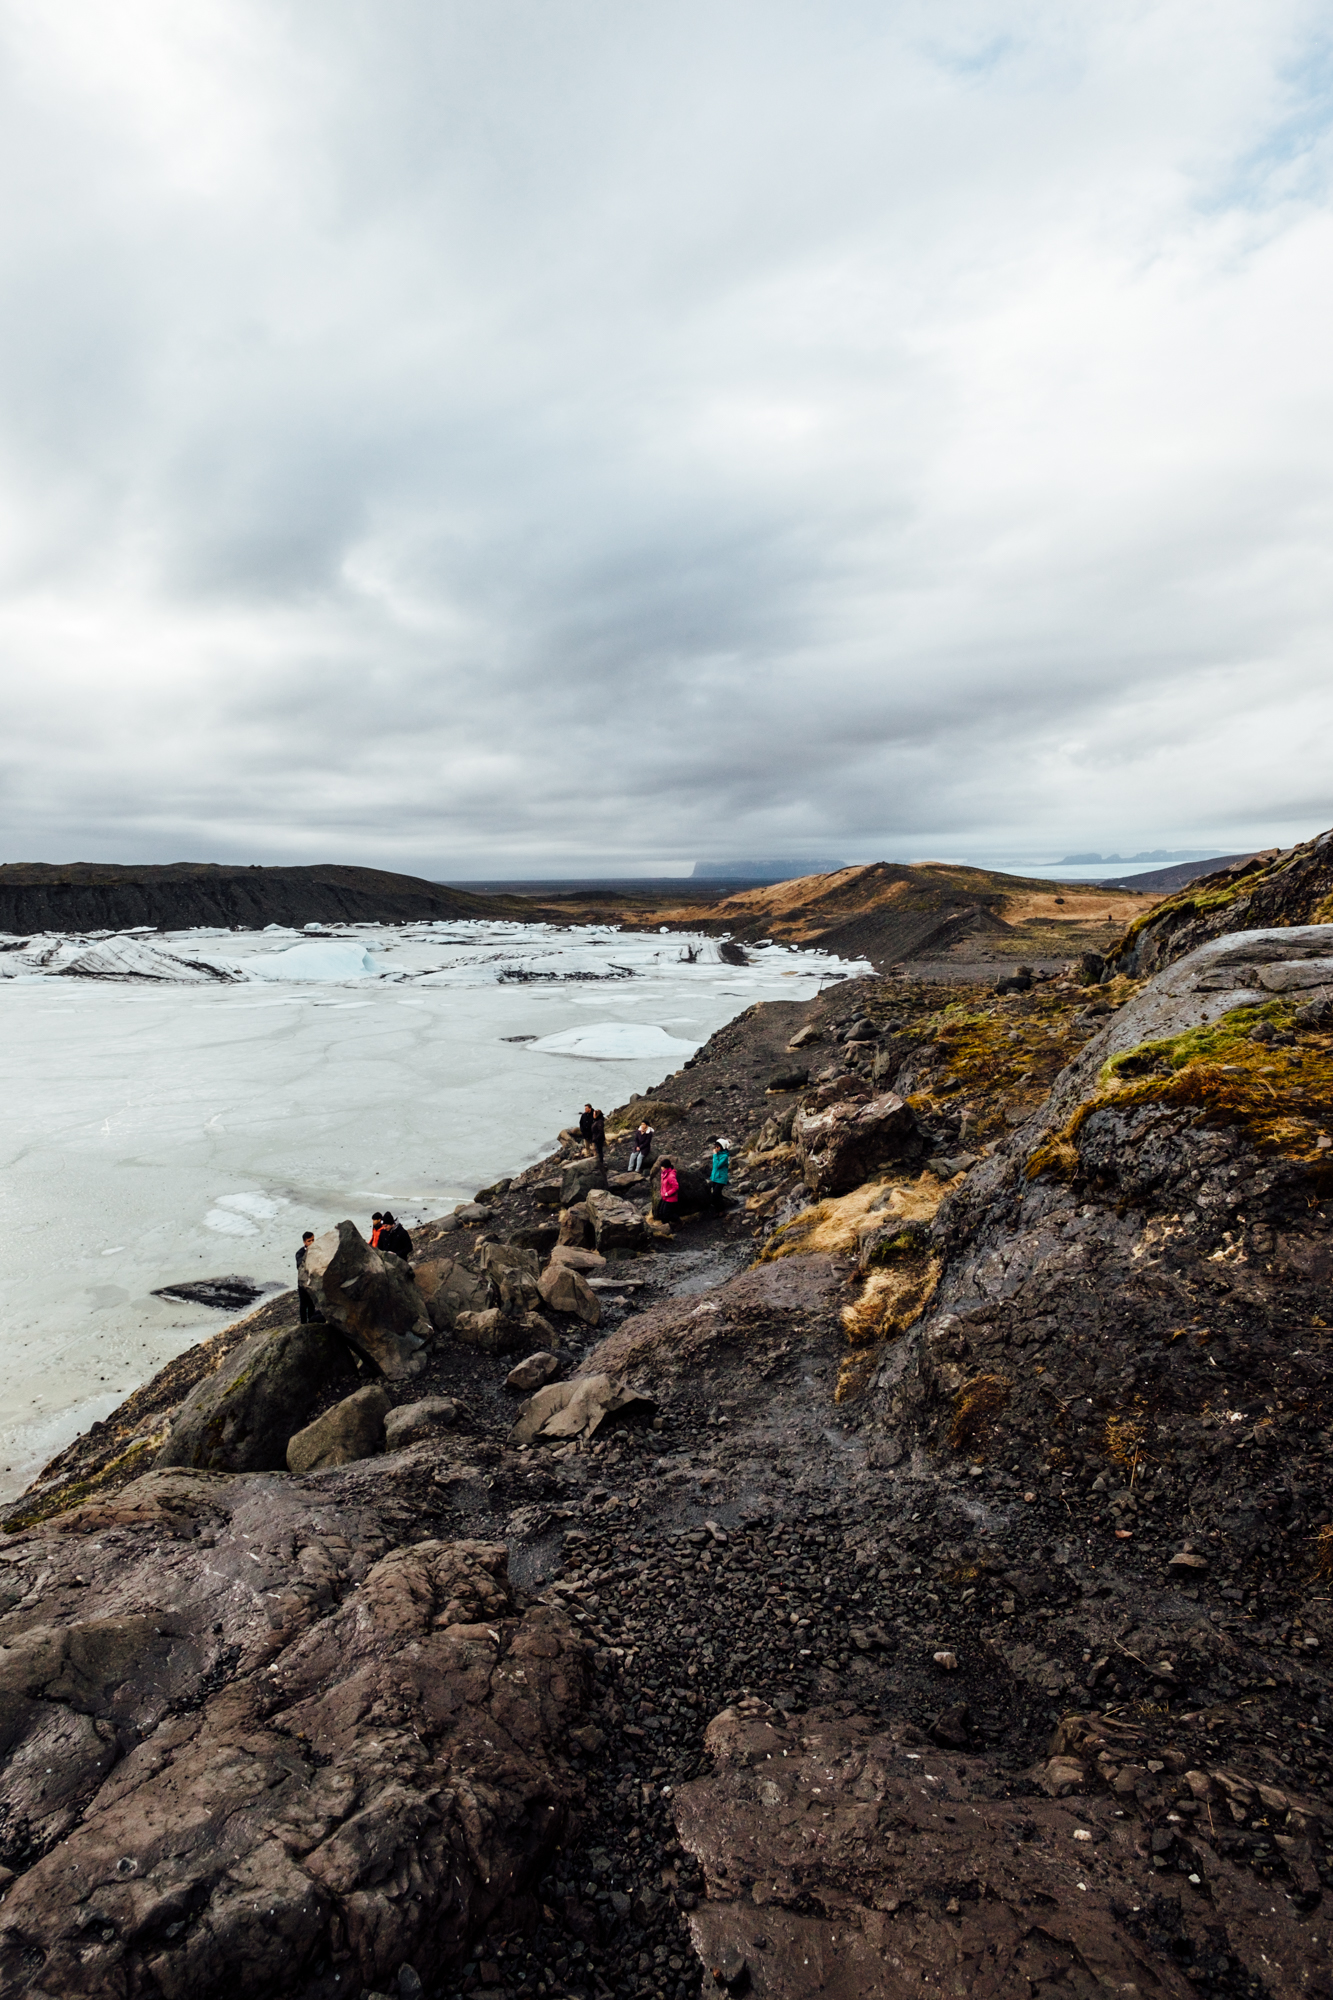  The view towards the ocean from Svinafellsjökull. 